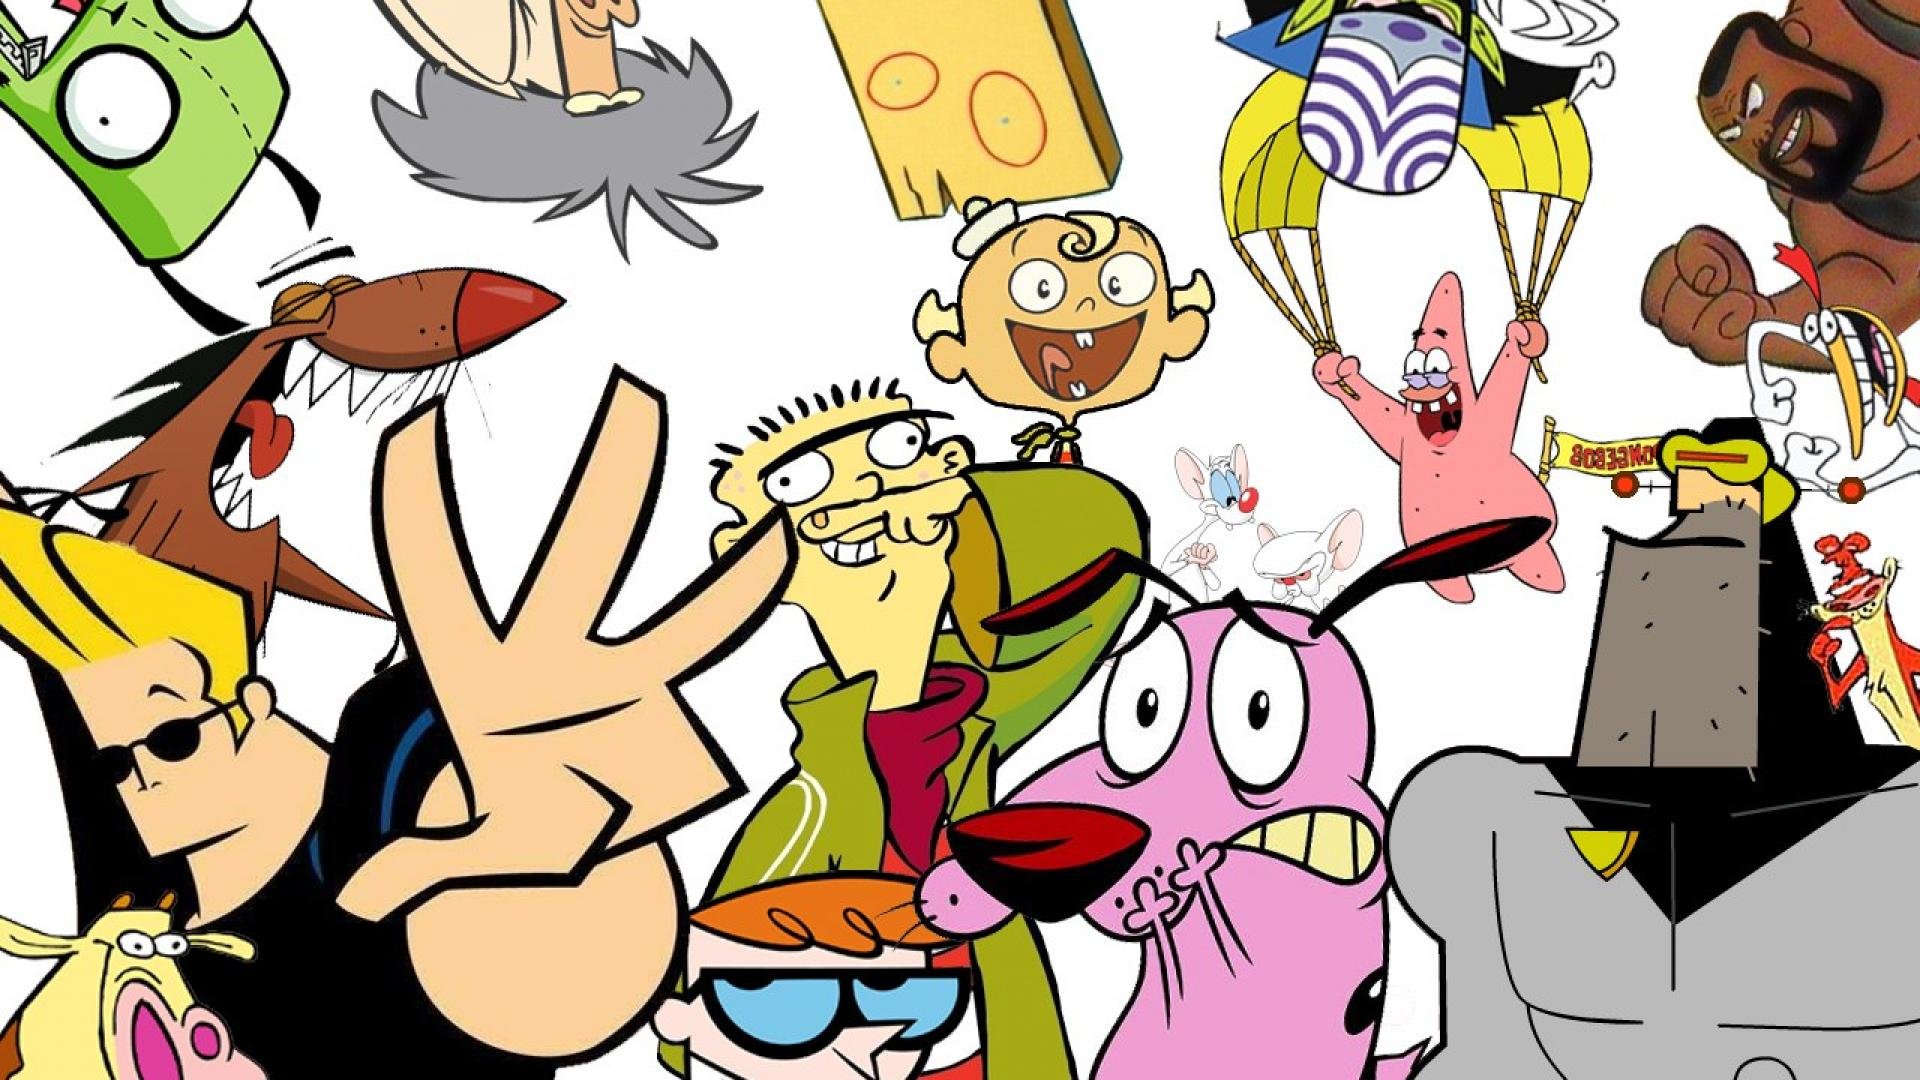 Dexter Cartoon Group Wallpaper Wp2004438 - Cartoon Network 90s Cartoon  Characters - 1920x1080 Wallpaper 